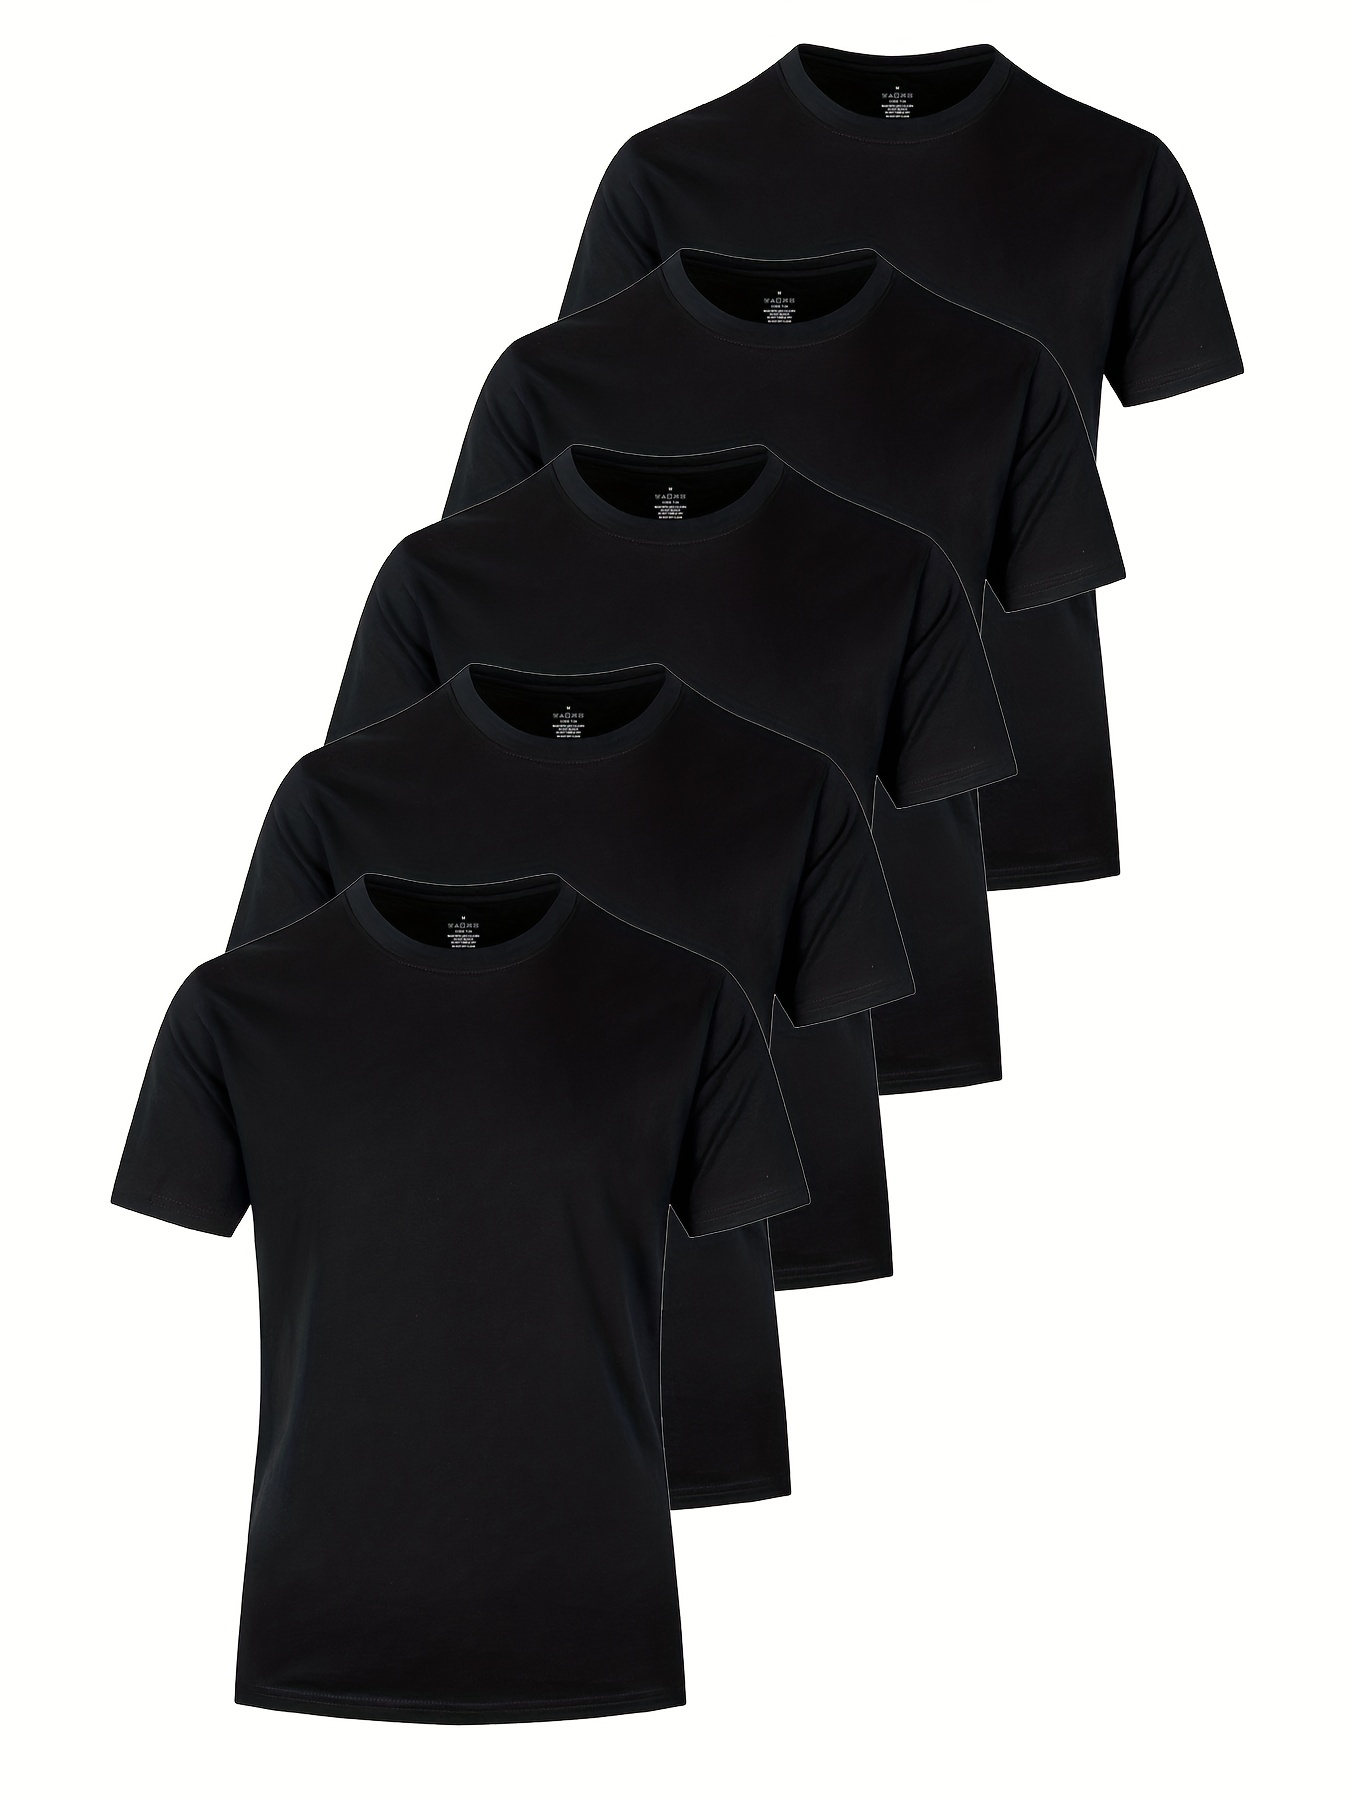 Camisetas Negras Algodon Cuello Redondo